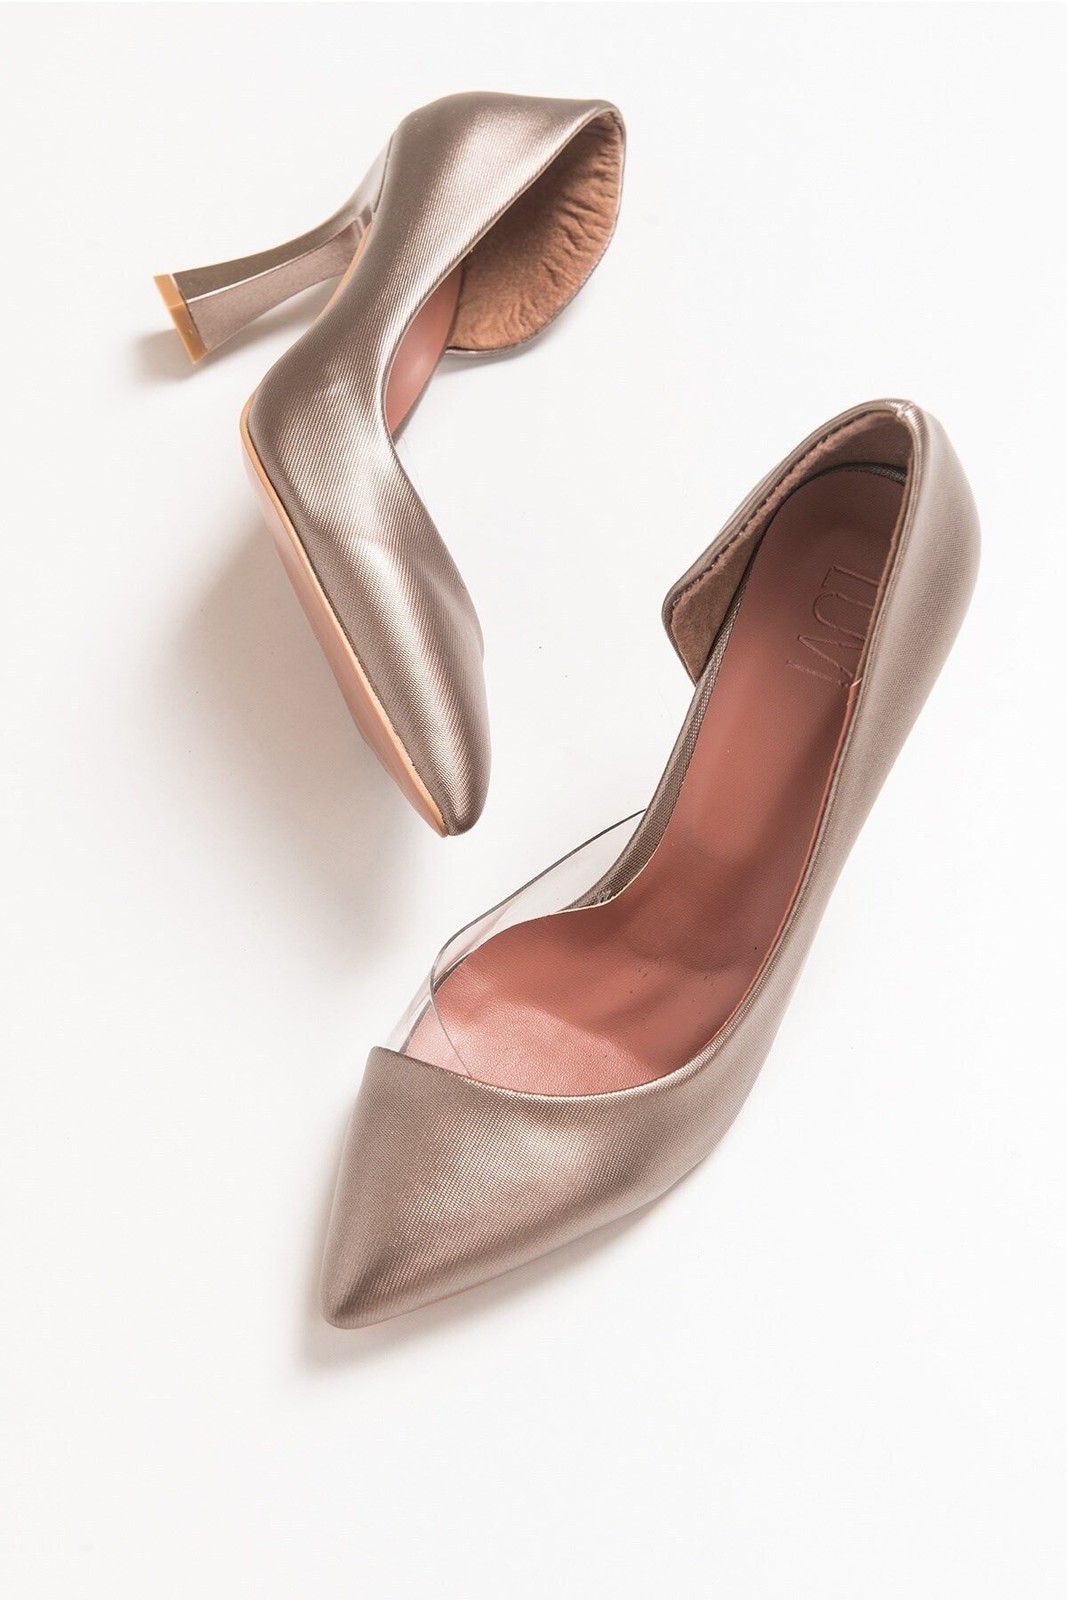 LuviShoes 653 Copper Lara Heels Women's Shoes